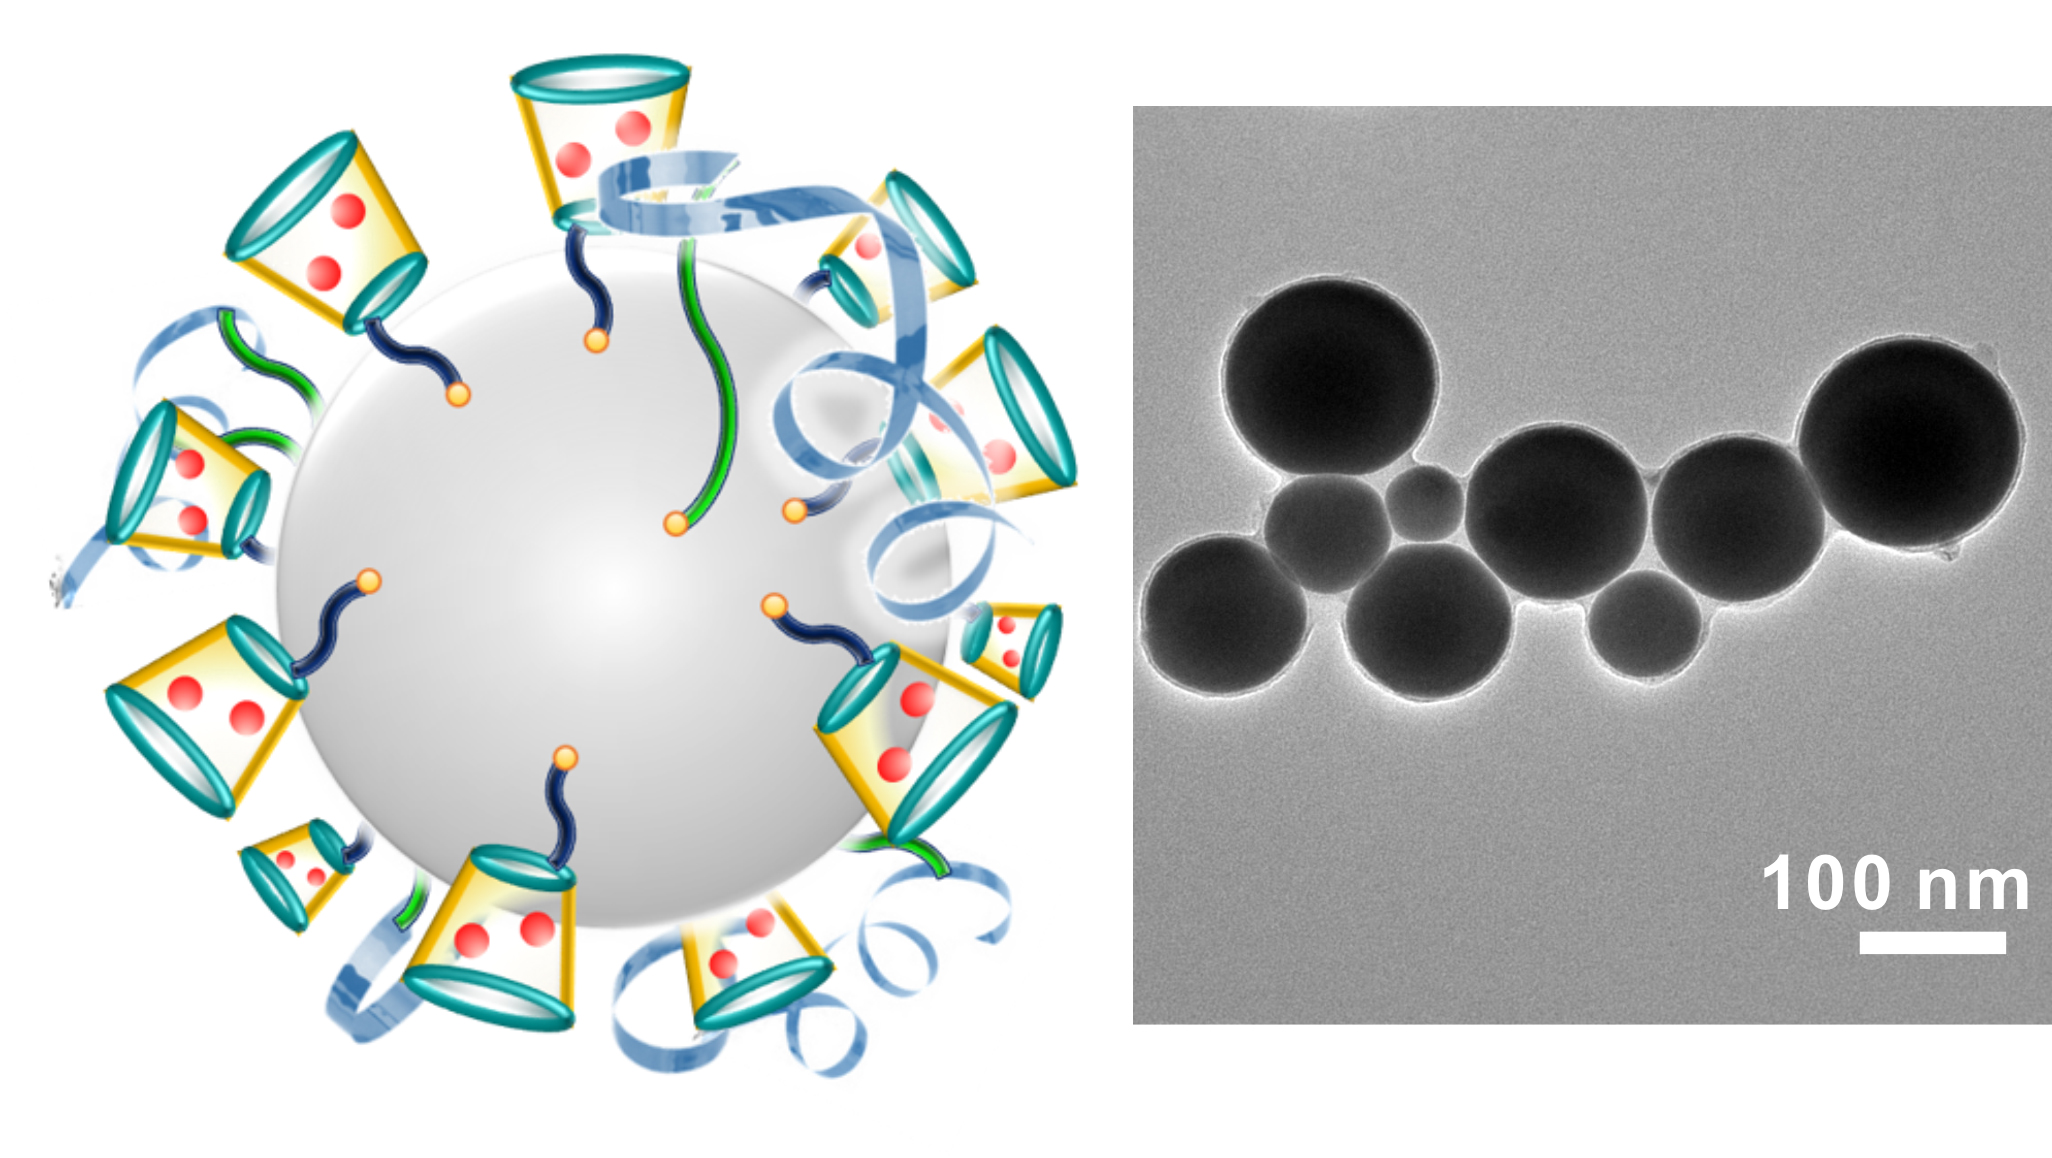 Liquid Metal ‘Nano Terminator’ Particles Could Fight Cancer